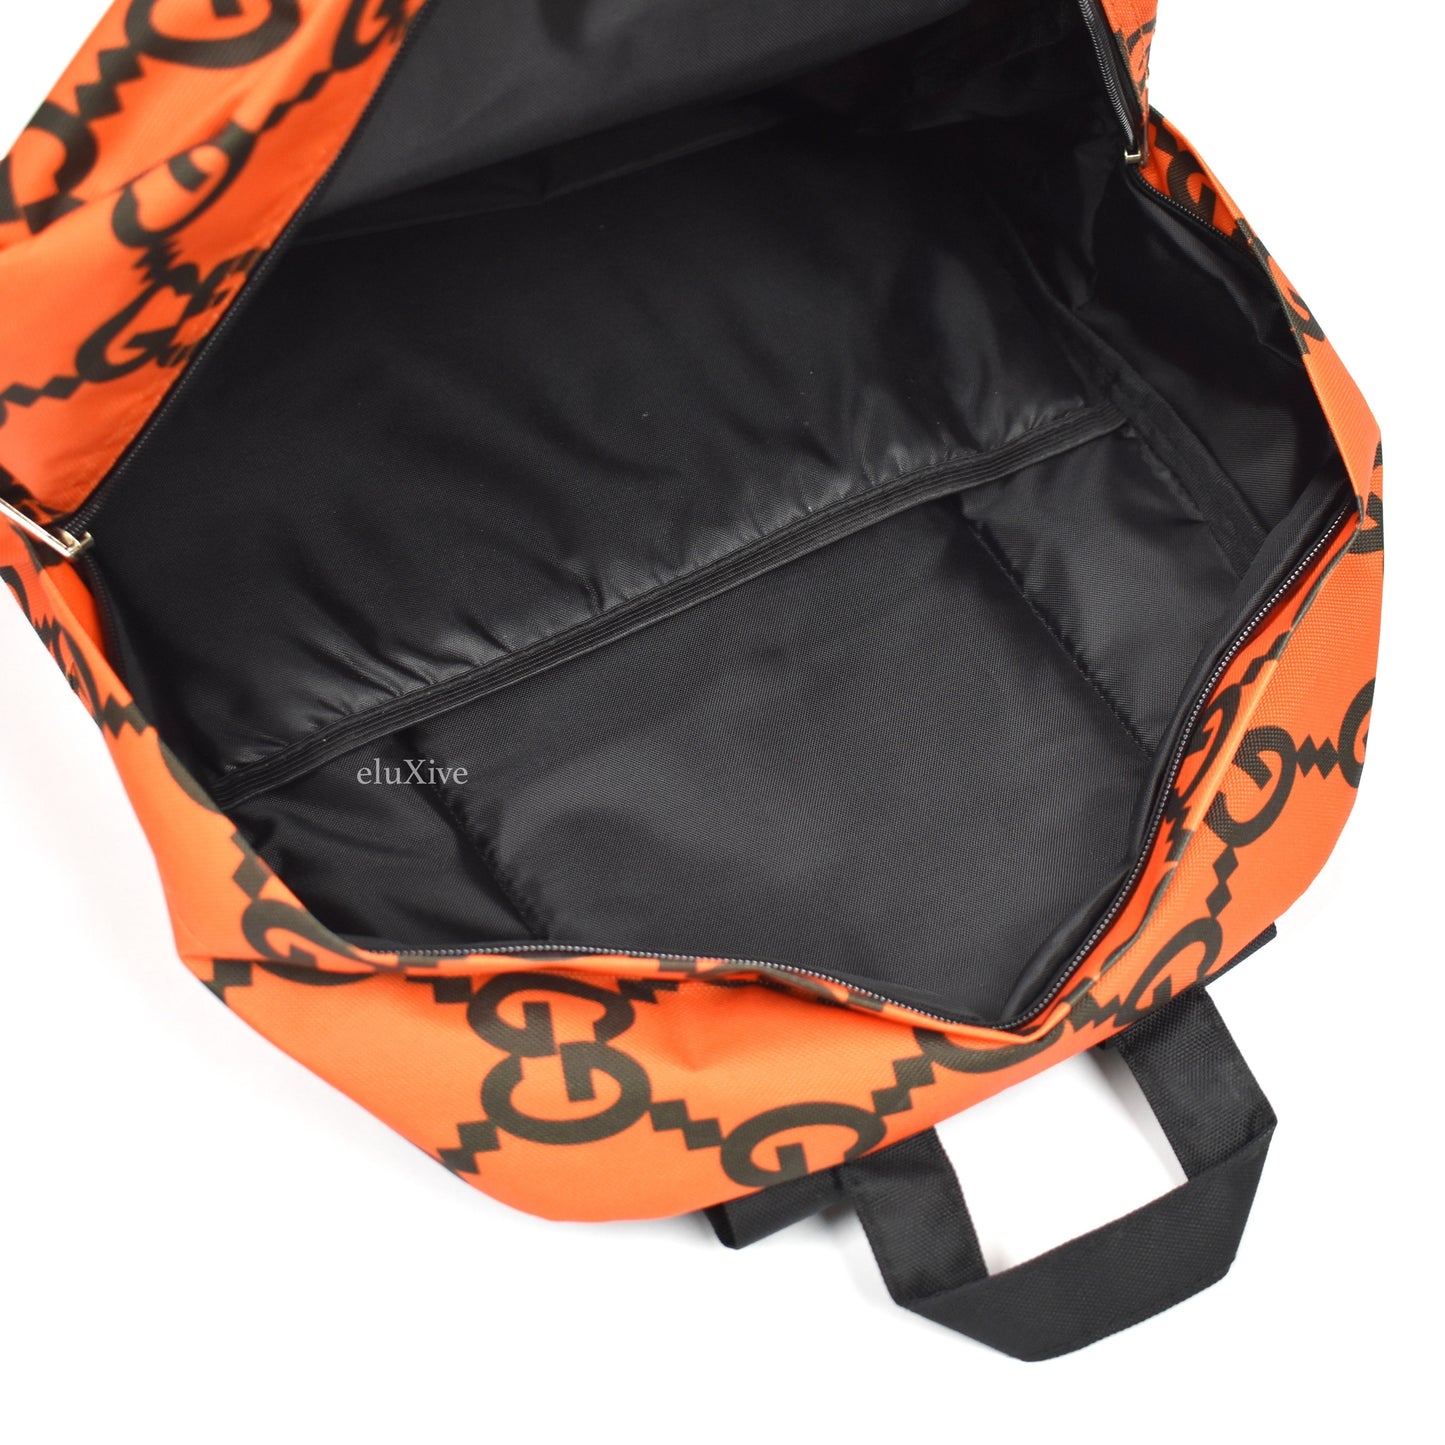 Imran Potato - Orange 'Gucci' Pumpkin Backpack